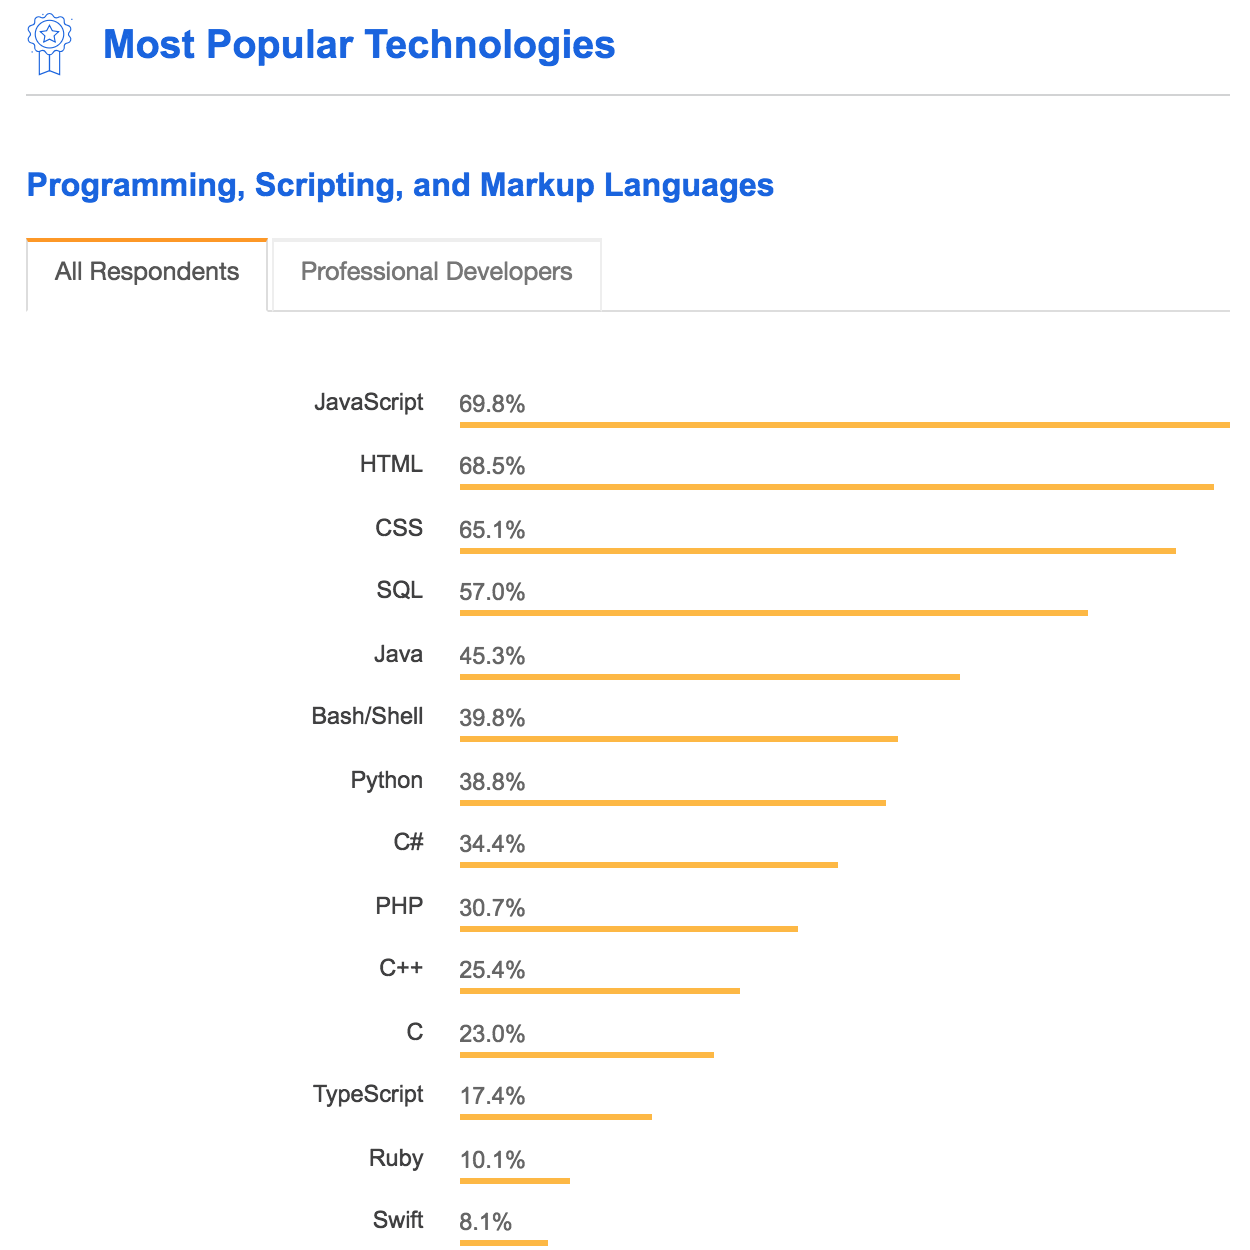 Most Popular Technologies